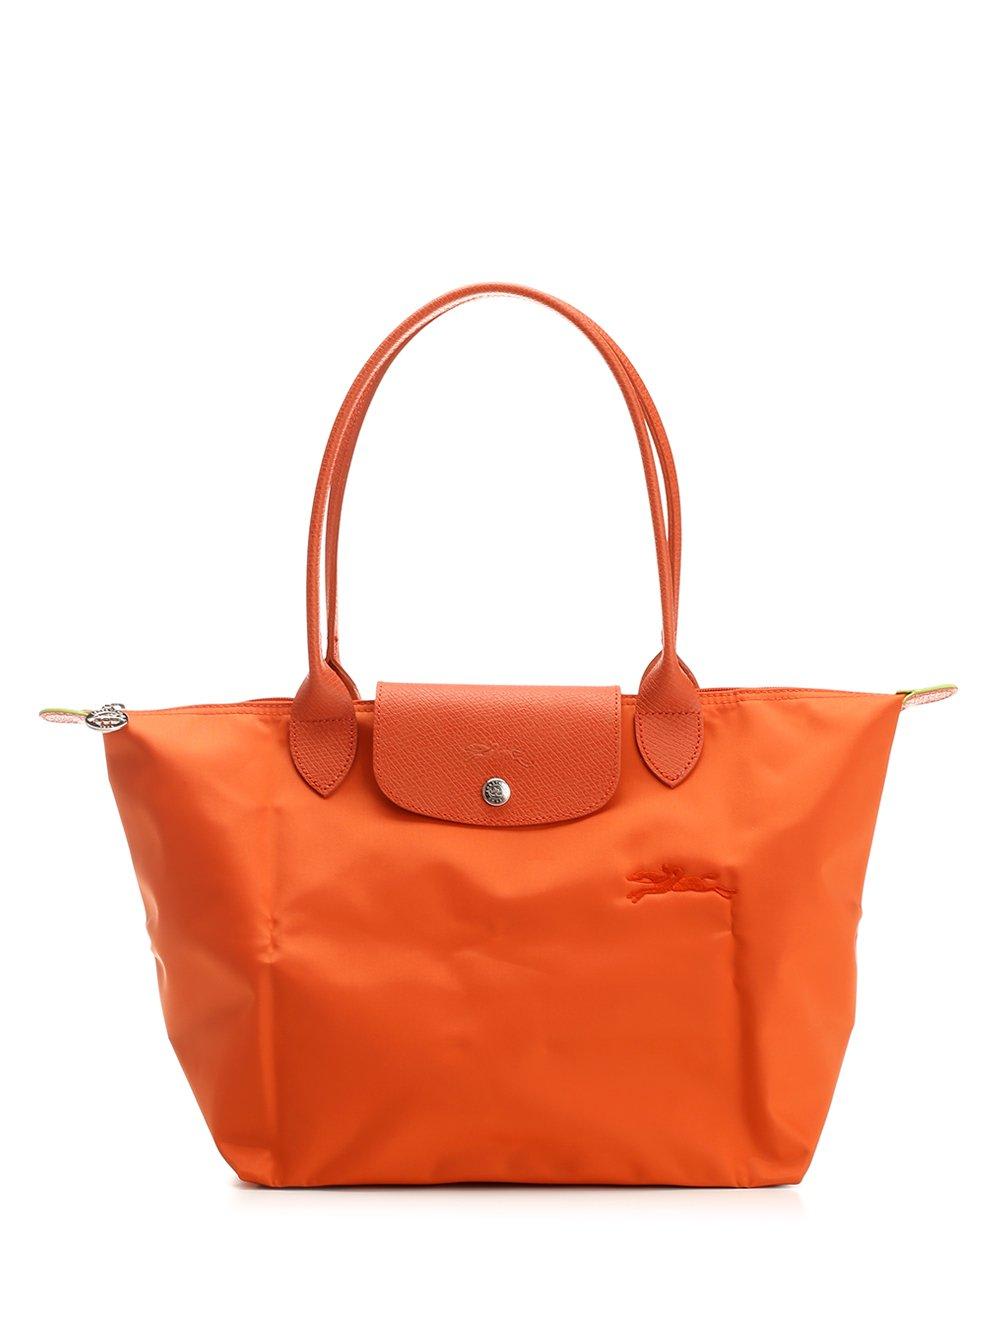 Longchamp Le Pliage Small Tote Bag | ModeSens